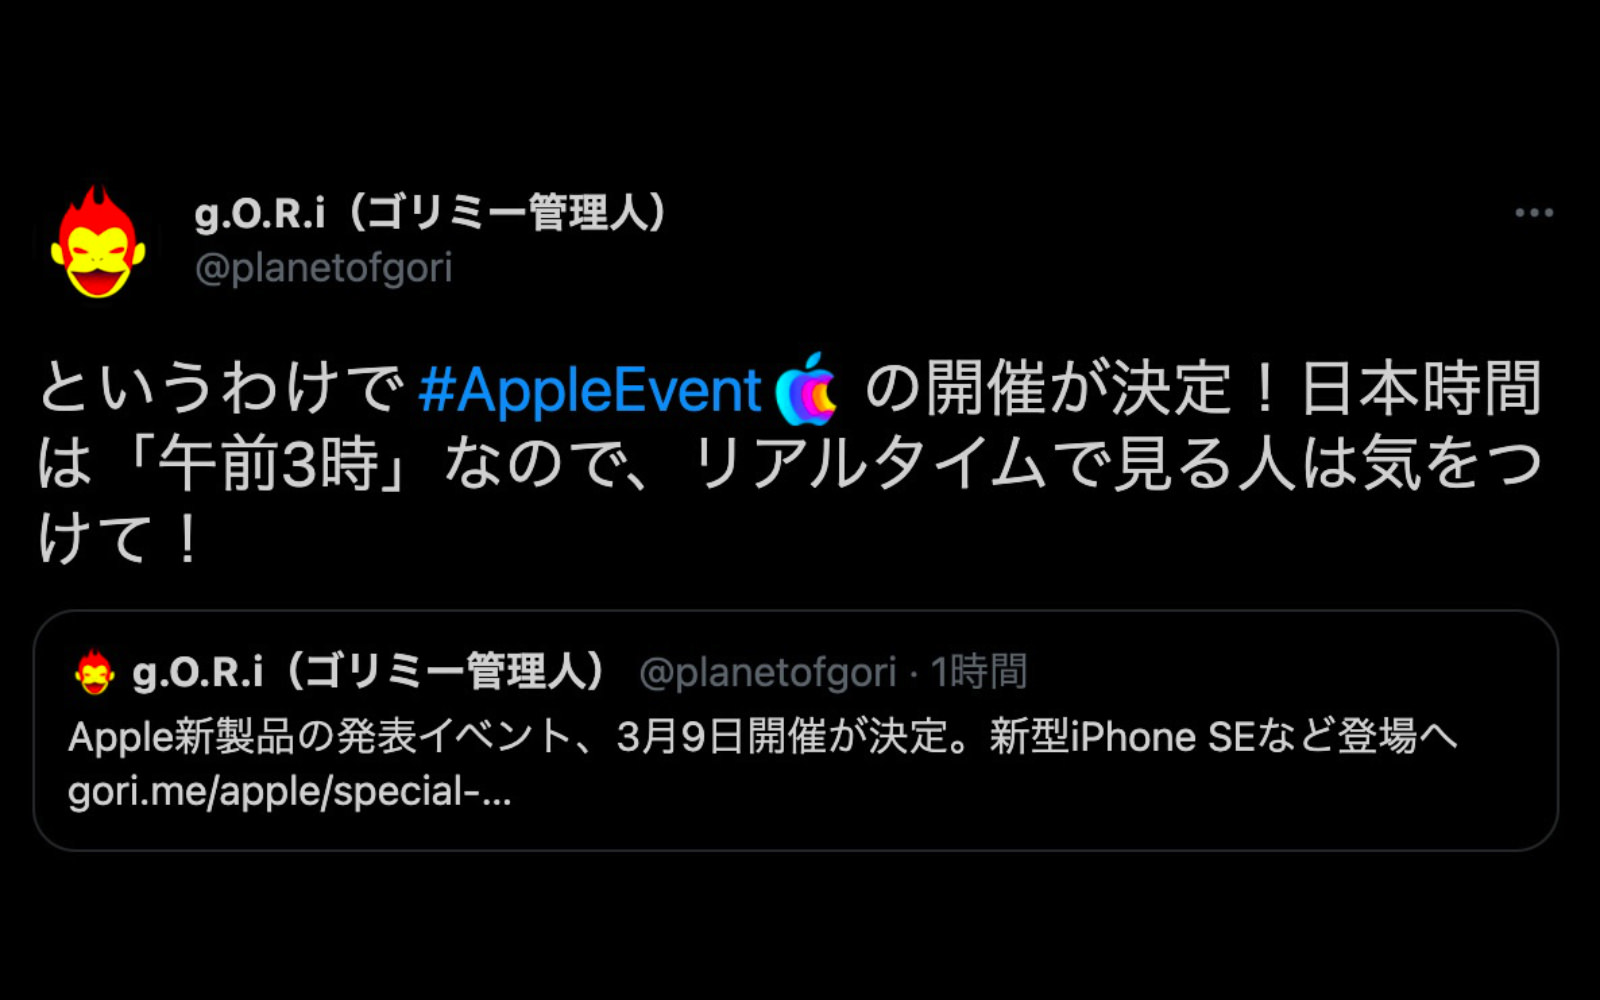 Apple Event Peek Performance Twitter Hashtag